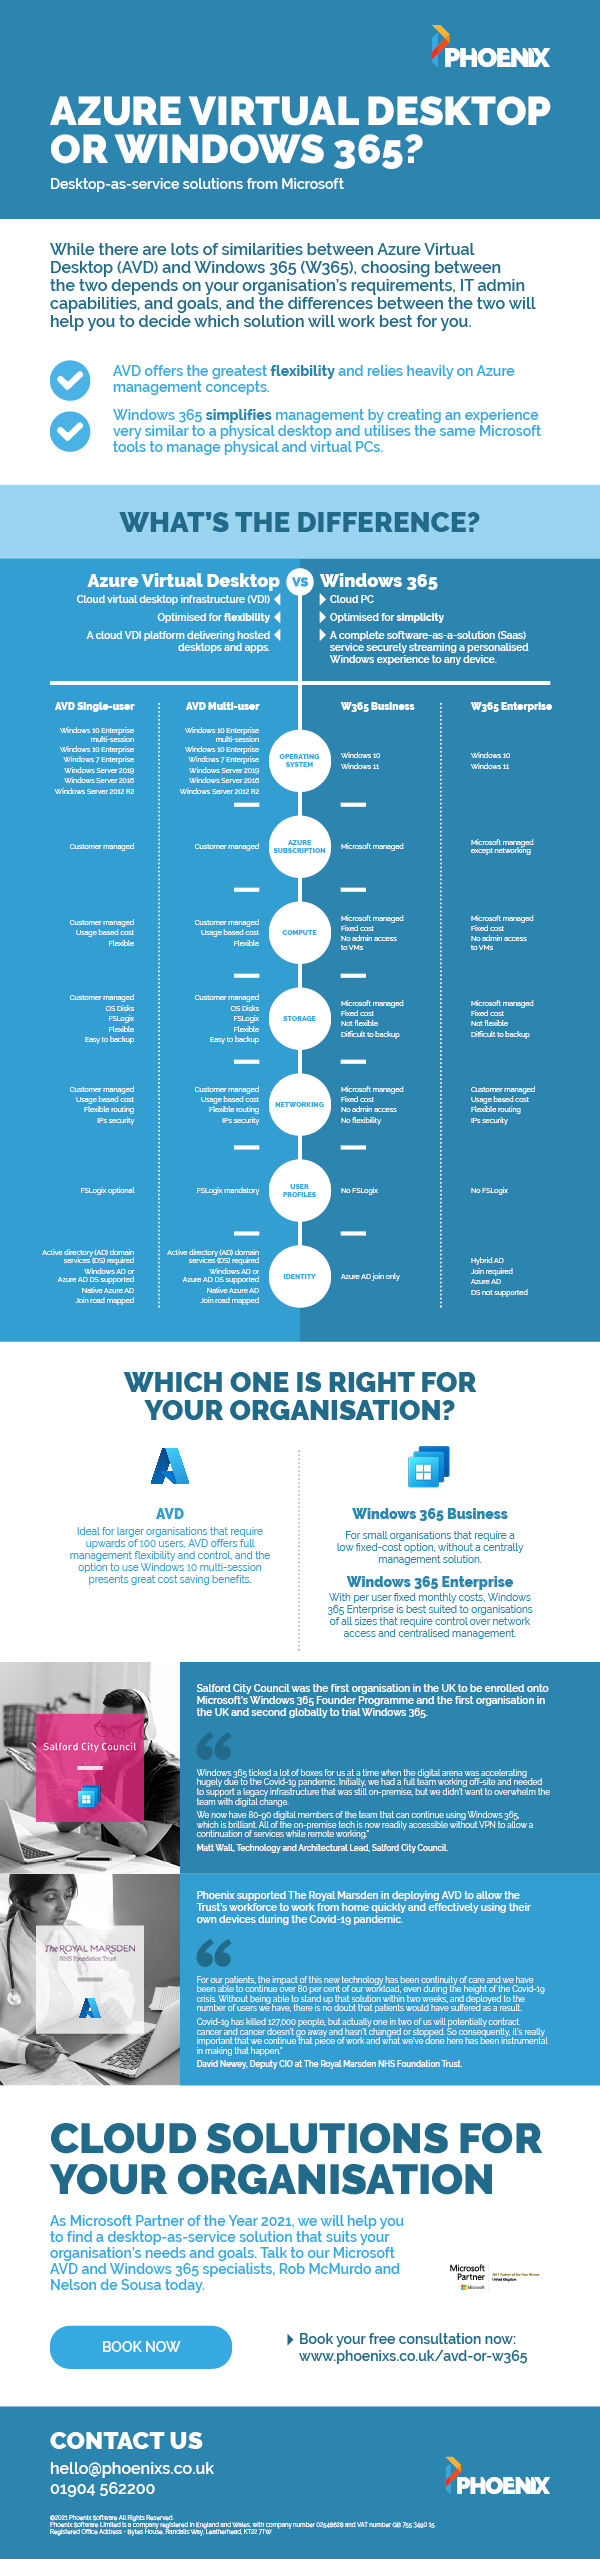 Infographic: AVD or Windows 365?